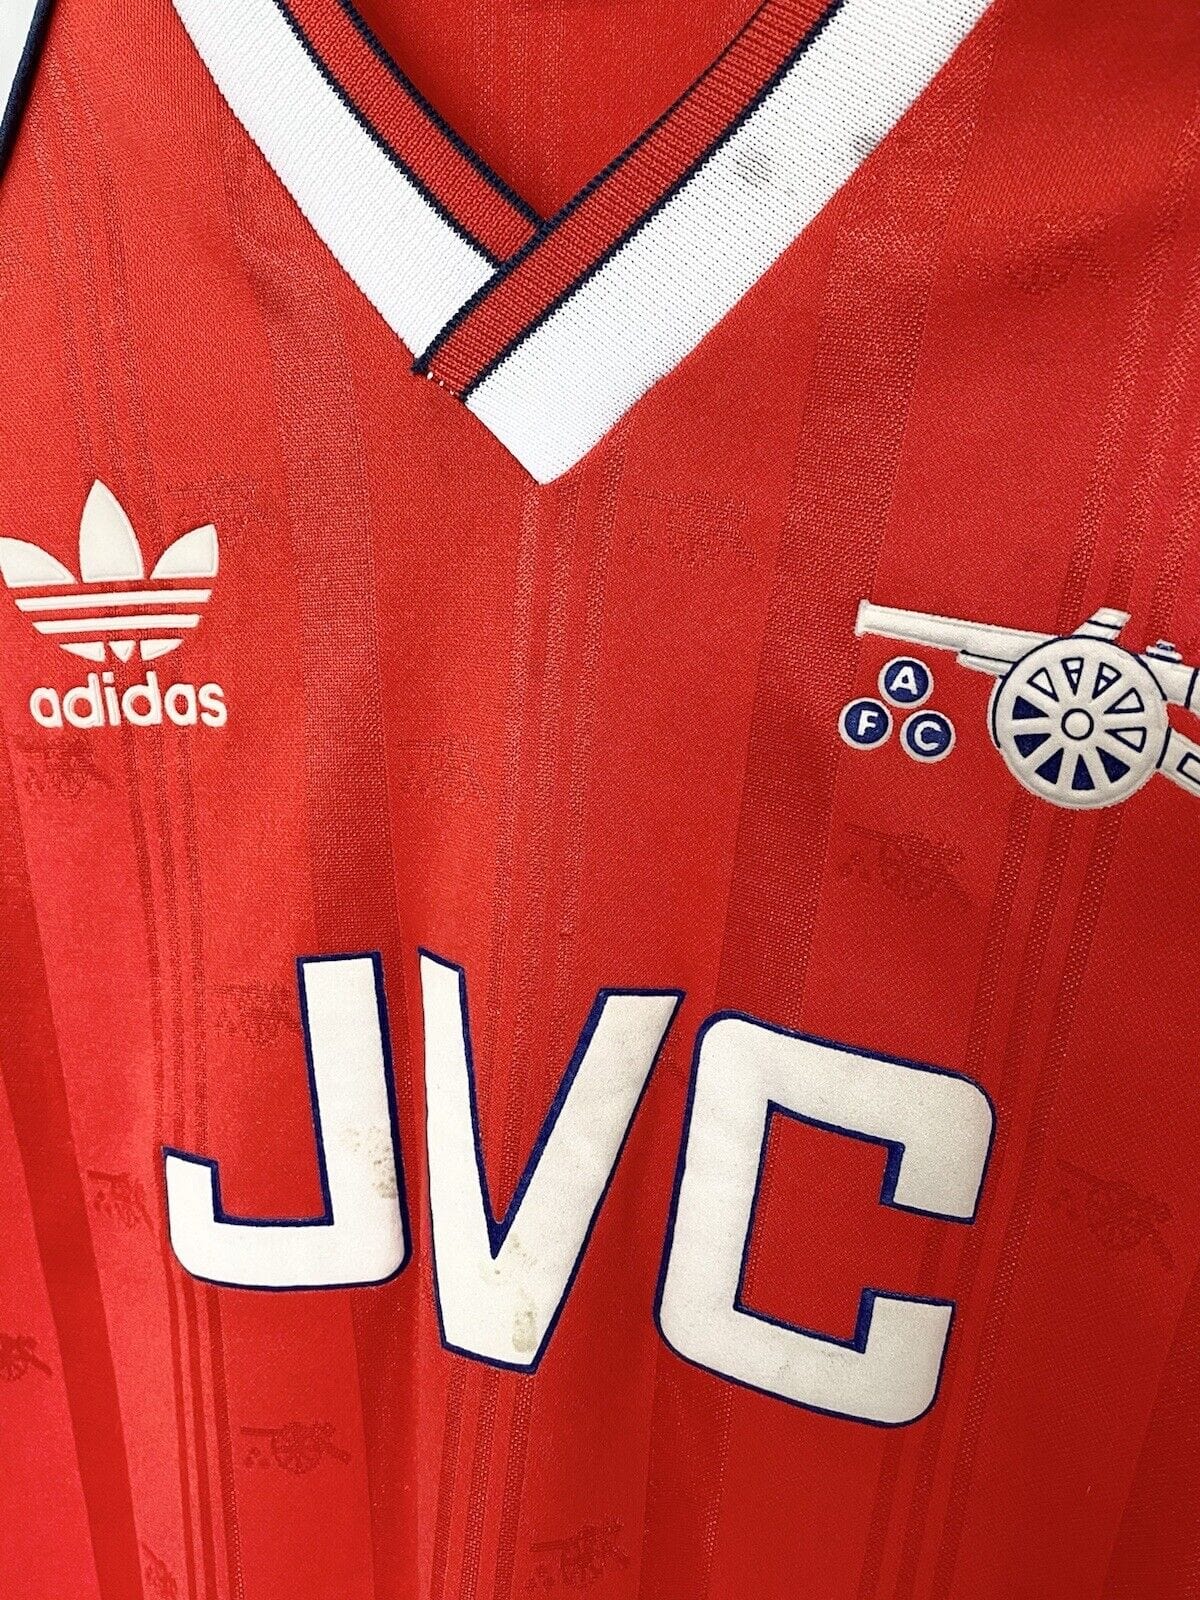 1993/94 WRIGHT #8 Arsenal Retro adidas Equipment LS Away Football Shir -  Football Shirt Collective